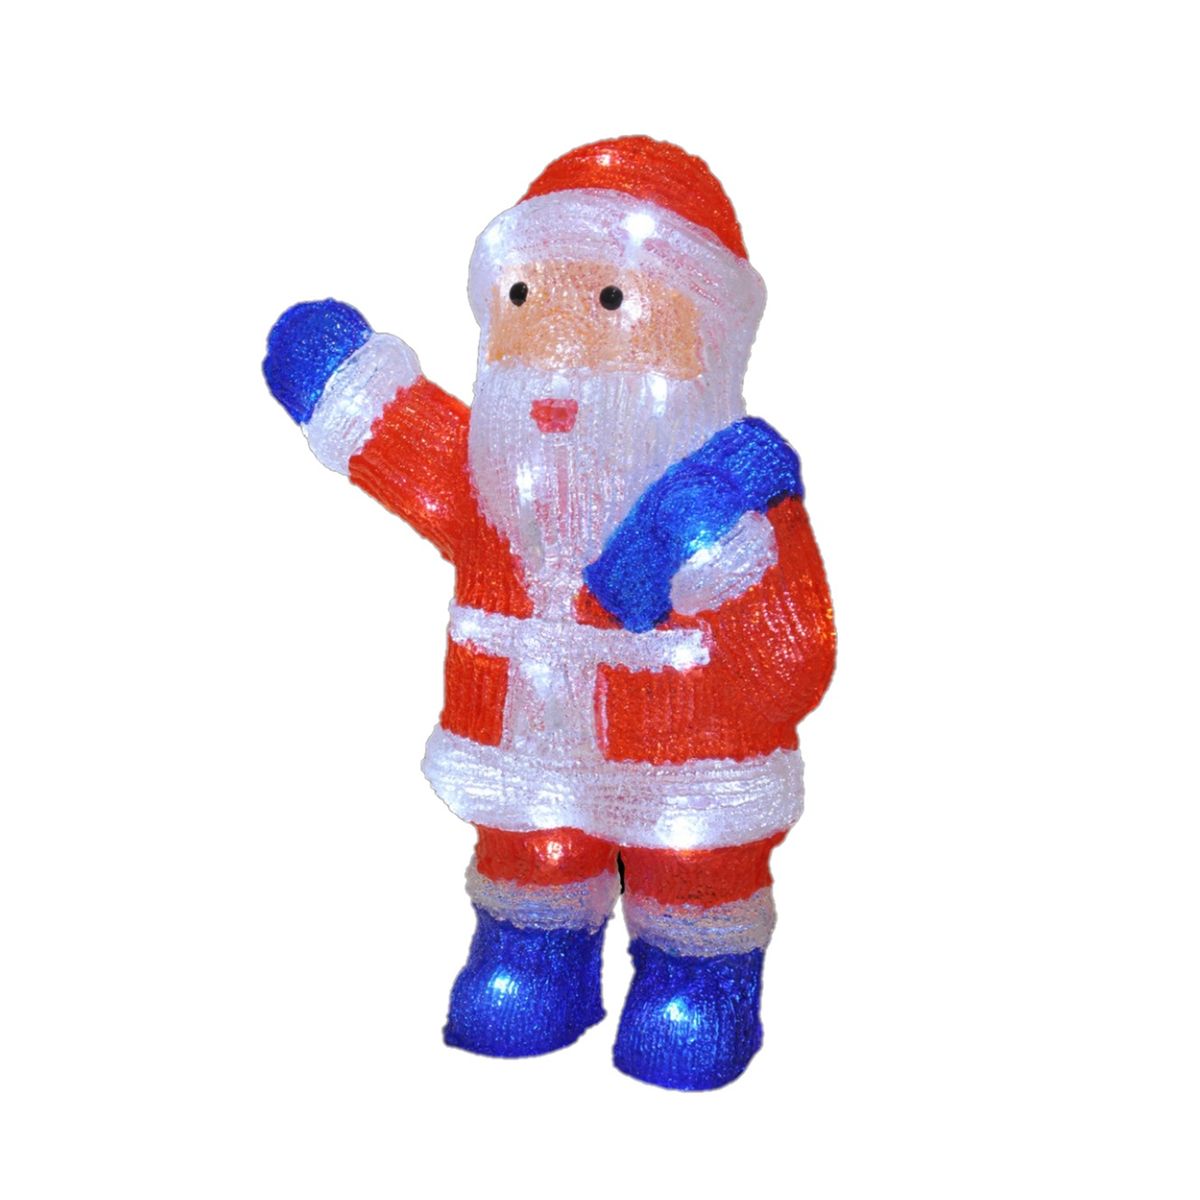 Figurine Grand Père Noël Olaf Debout – Sia Deco